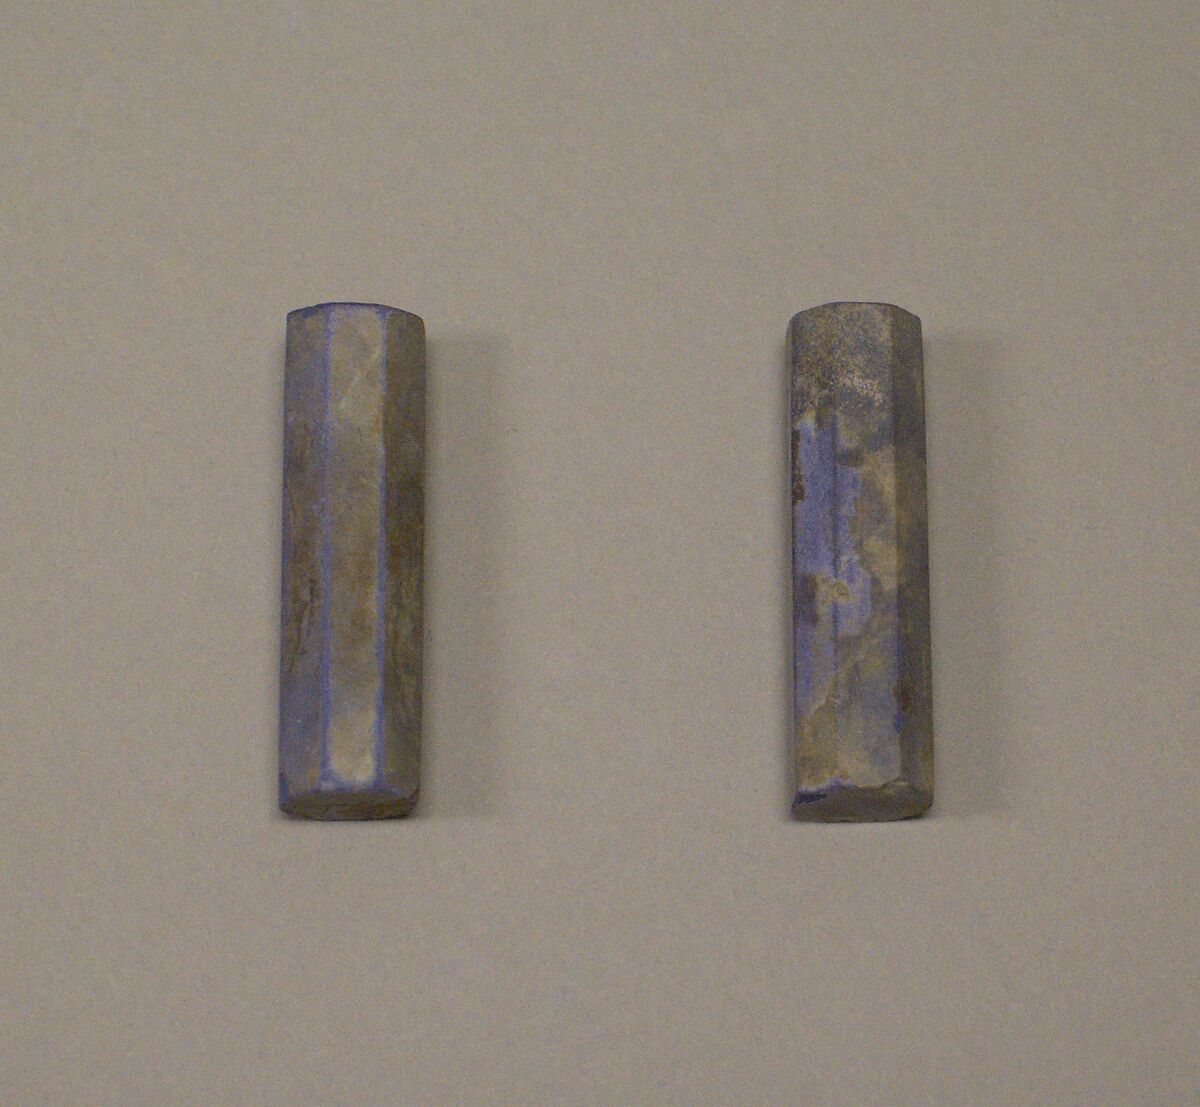 Pair of Octagonal Sticks, "Chinese blue" barium copper silicate, China 